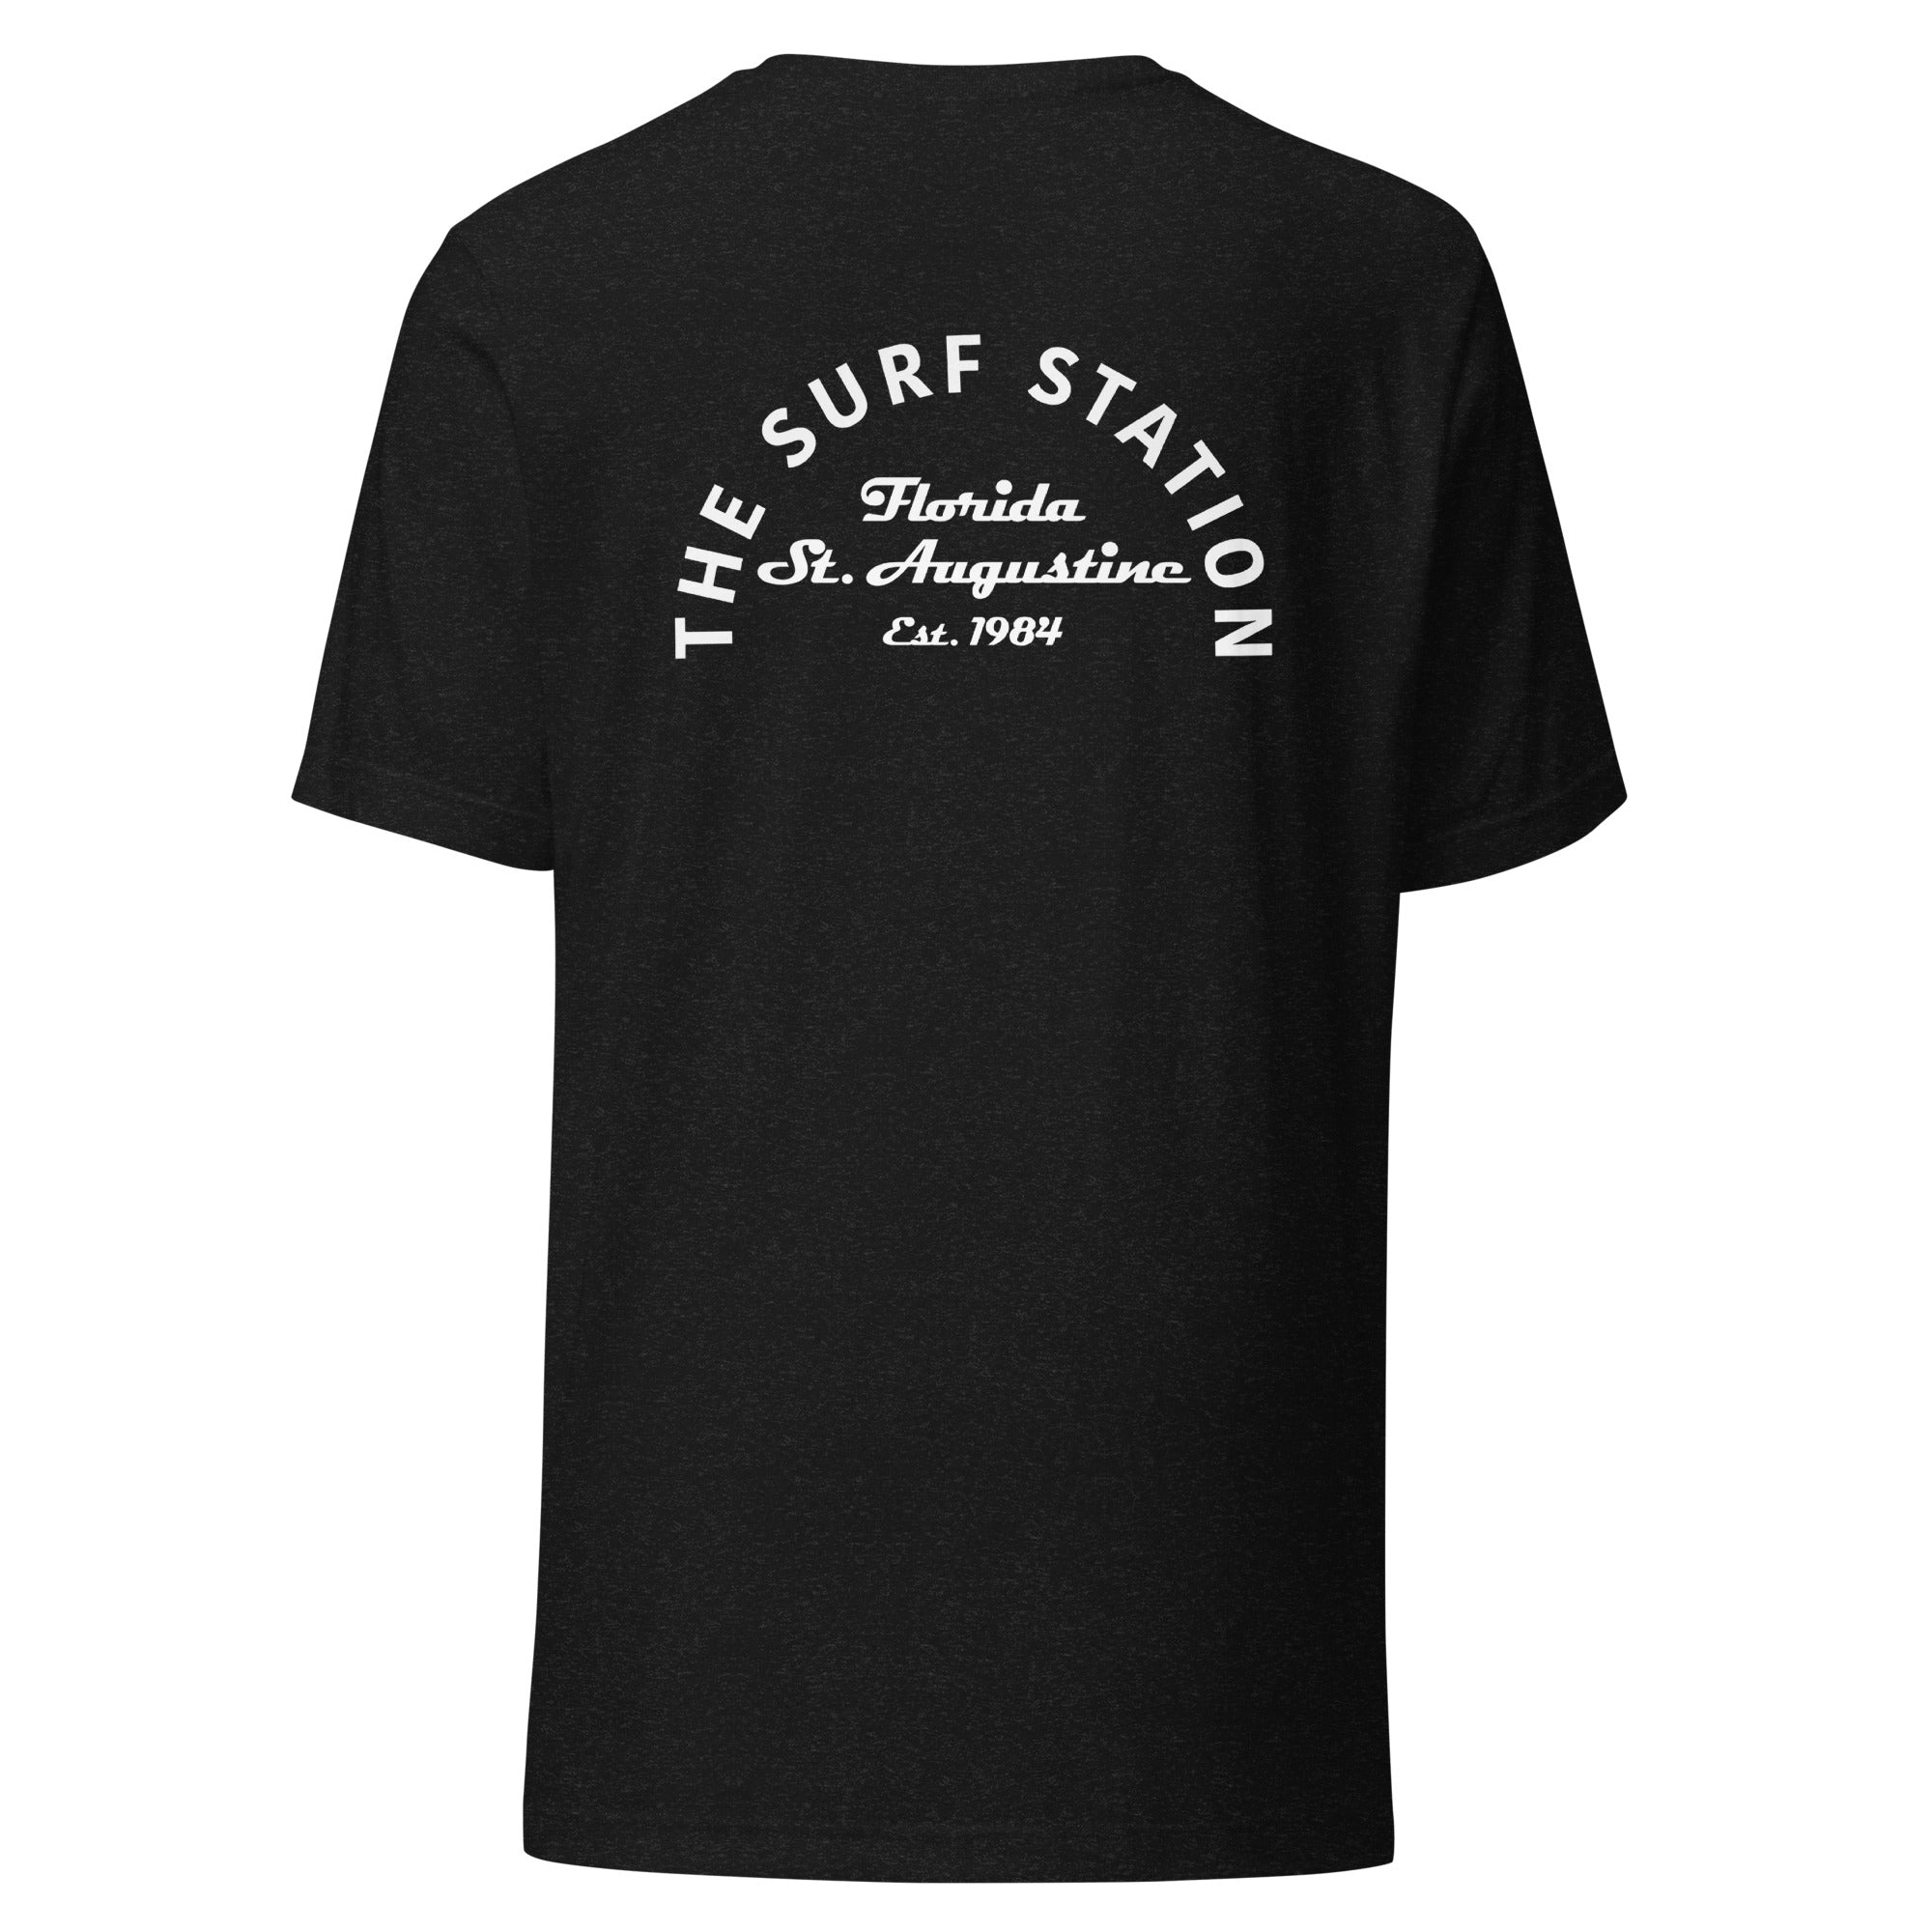 Surf Station Arch White Men's S/S T-Shirt